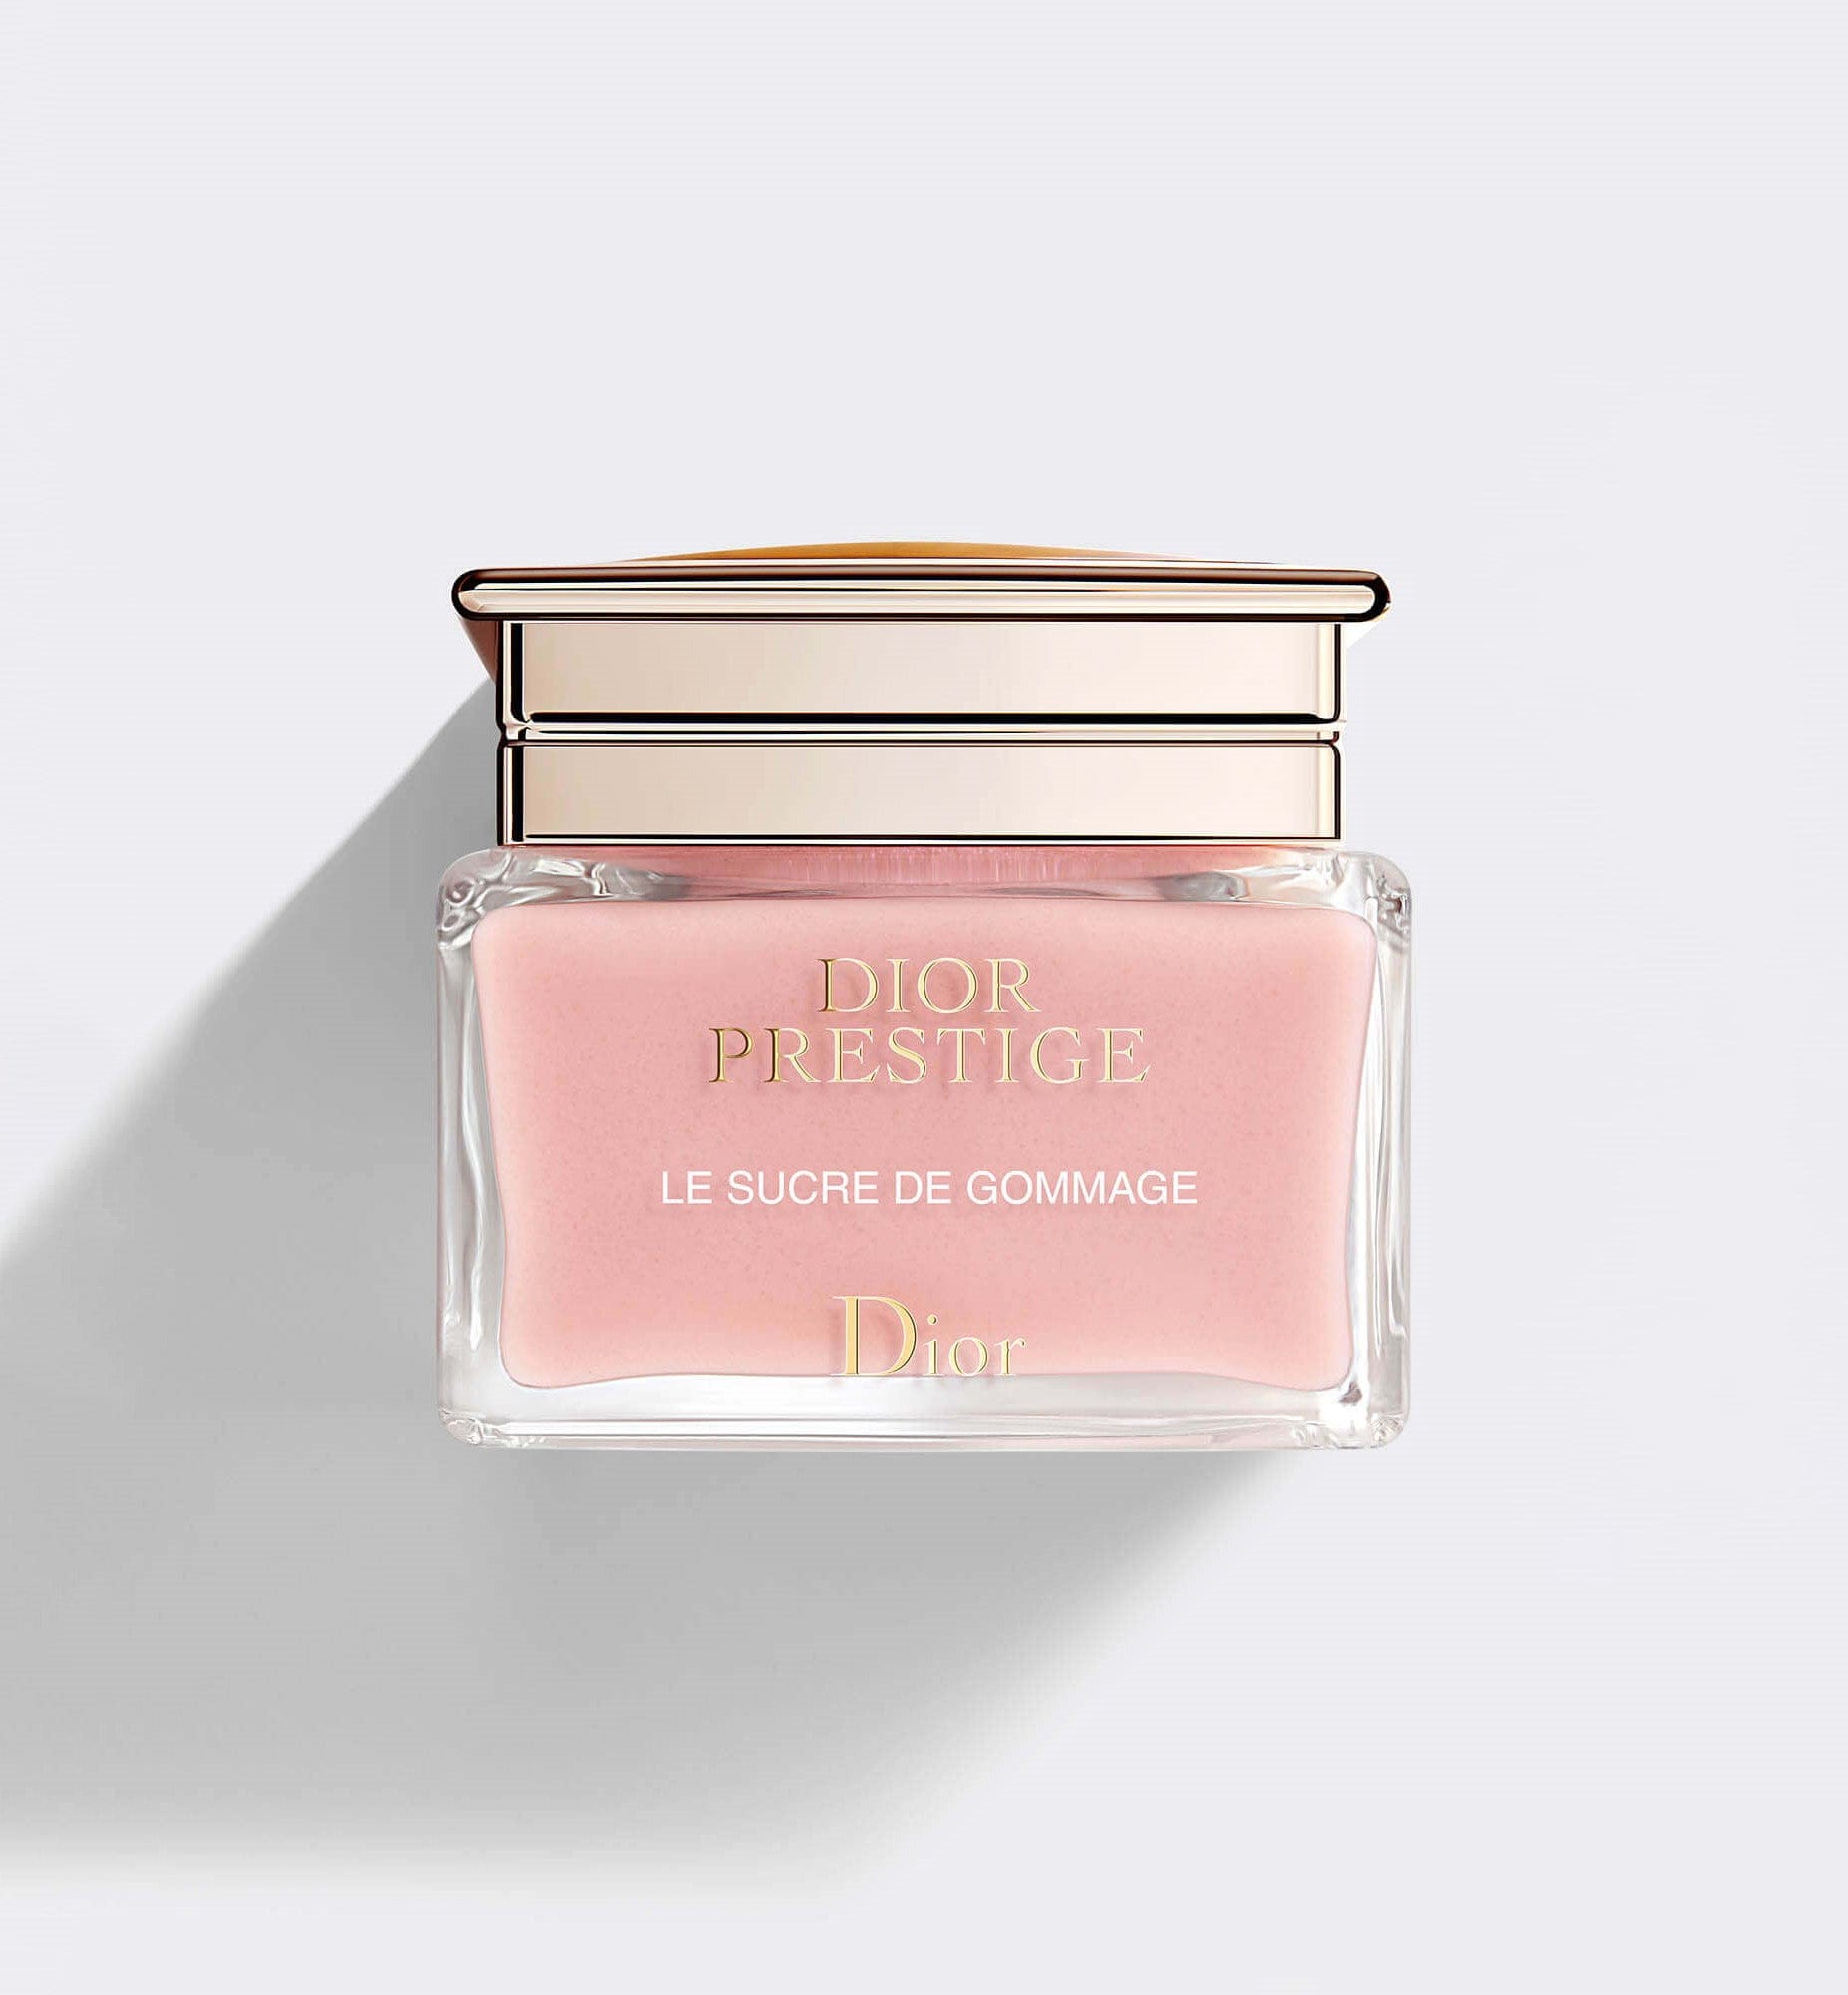 Dior Prestige Le Sucre de Gommage | Face Scrub - Exceptional Exfoliating Polishing Mask